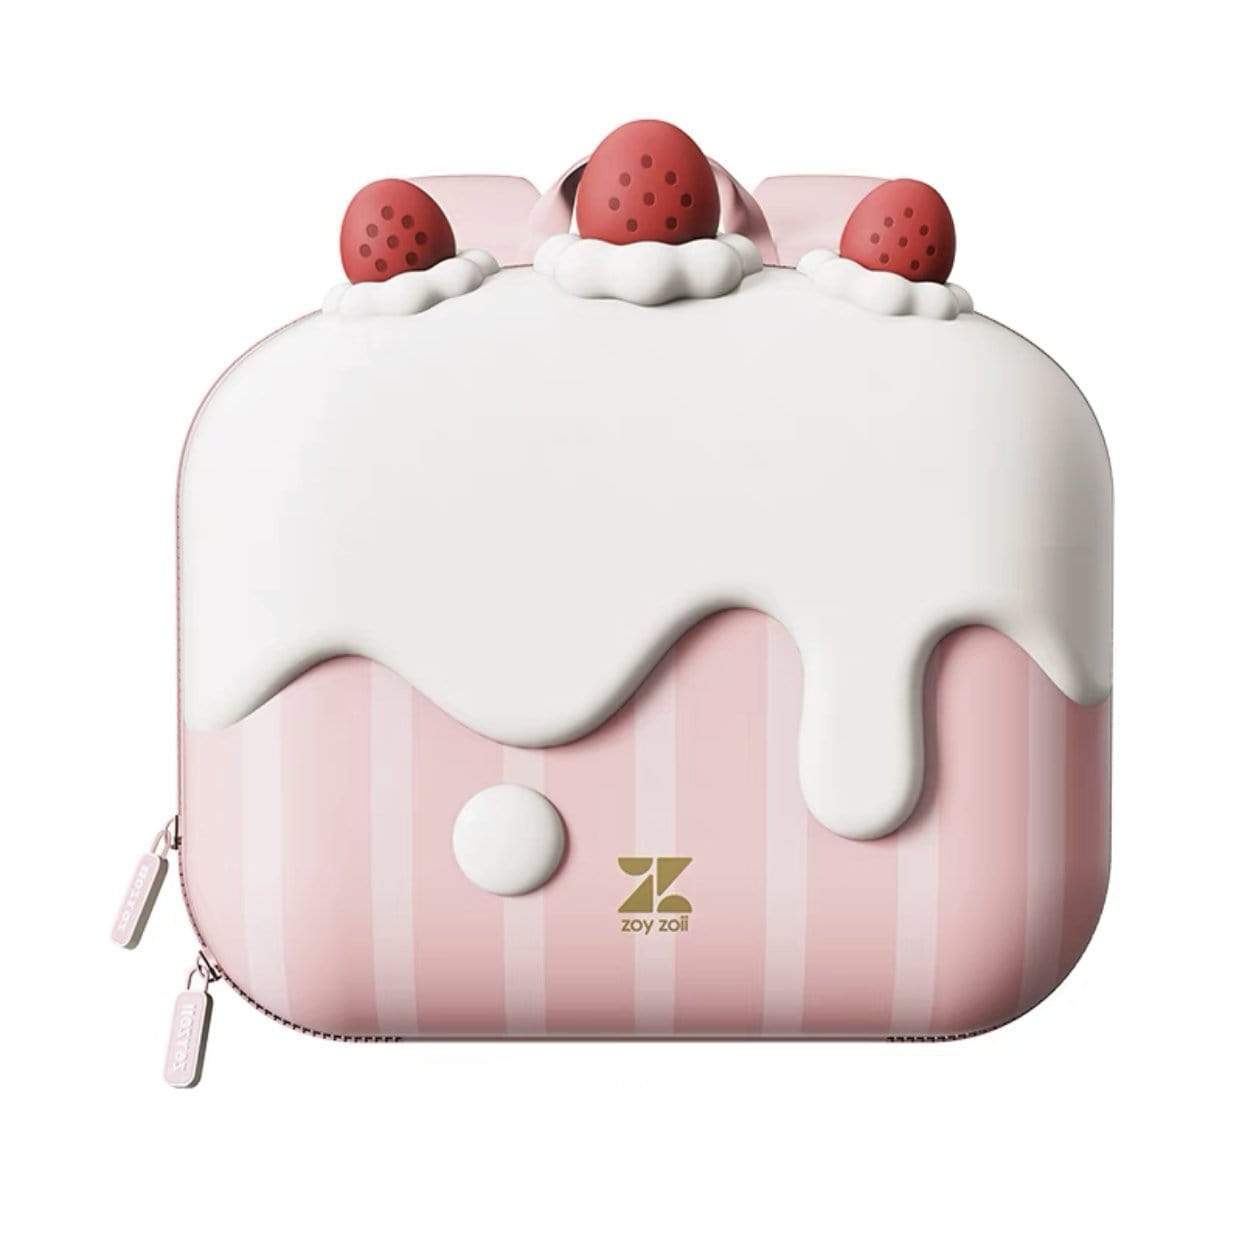 HELMS STORE Backpacks Zoy Zoii Premium 3D Character Backpack for Kids - Cake